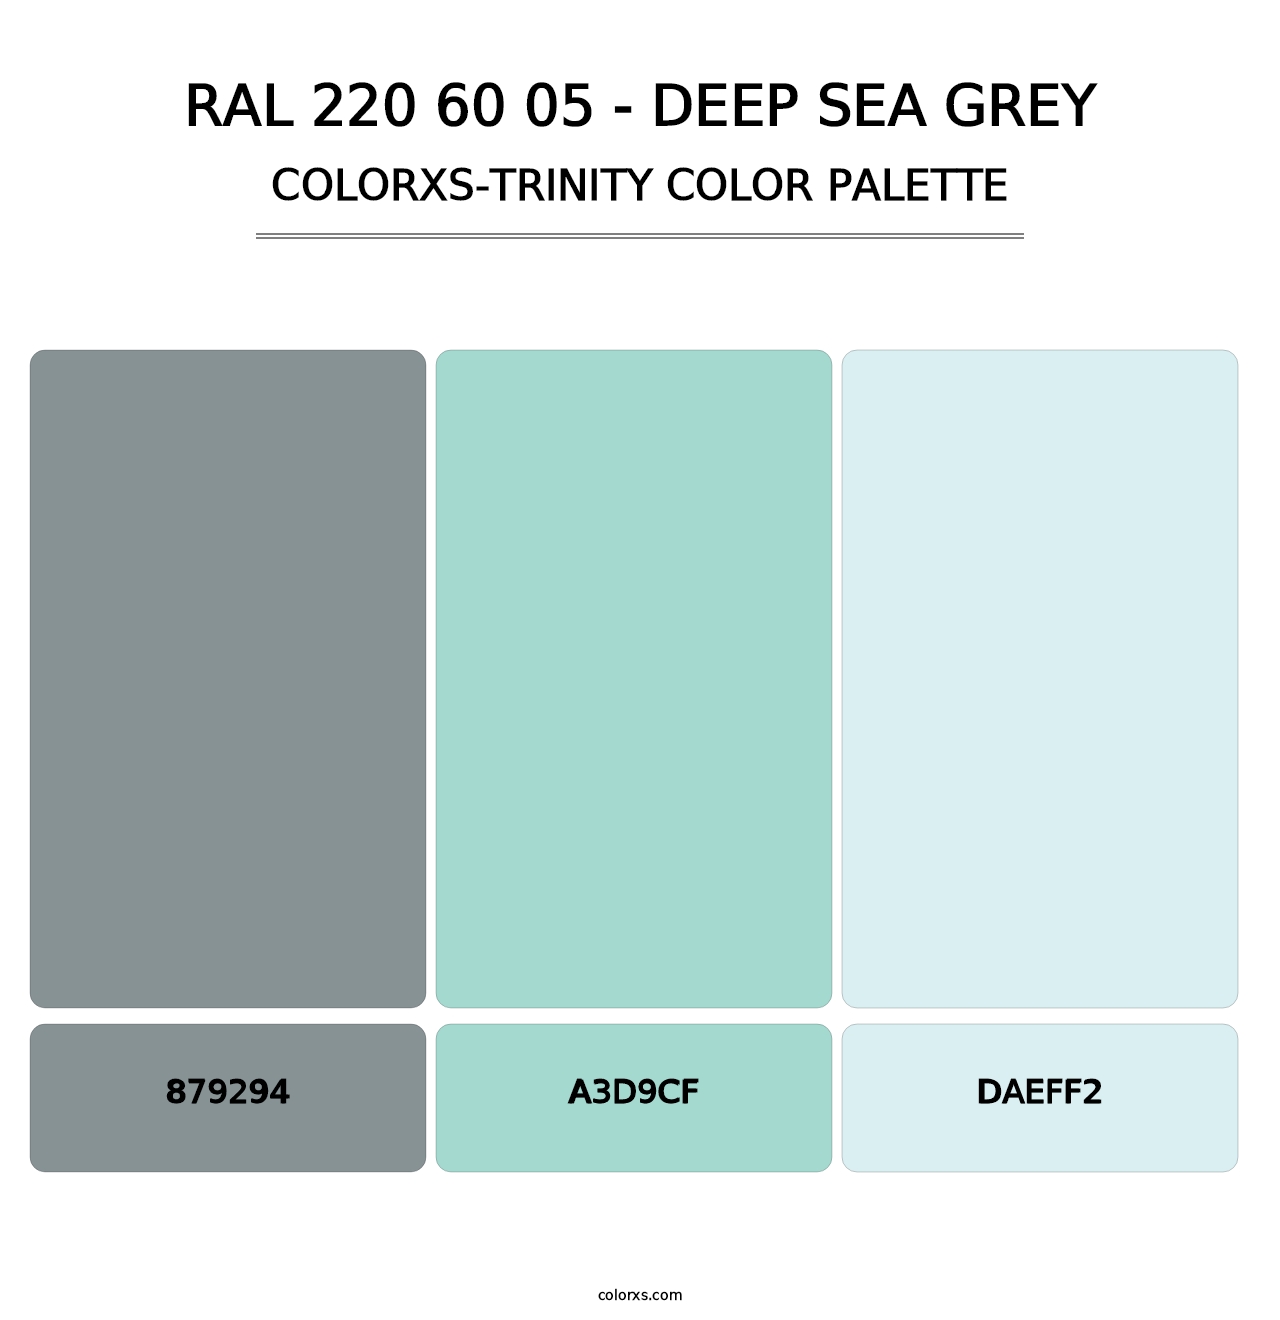 RAL 220 60 05 - Deep Sea Grey - Colorxs Trinity Palette